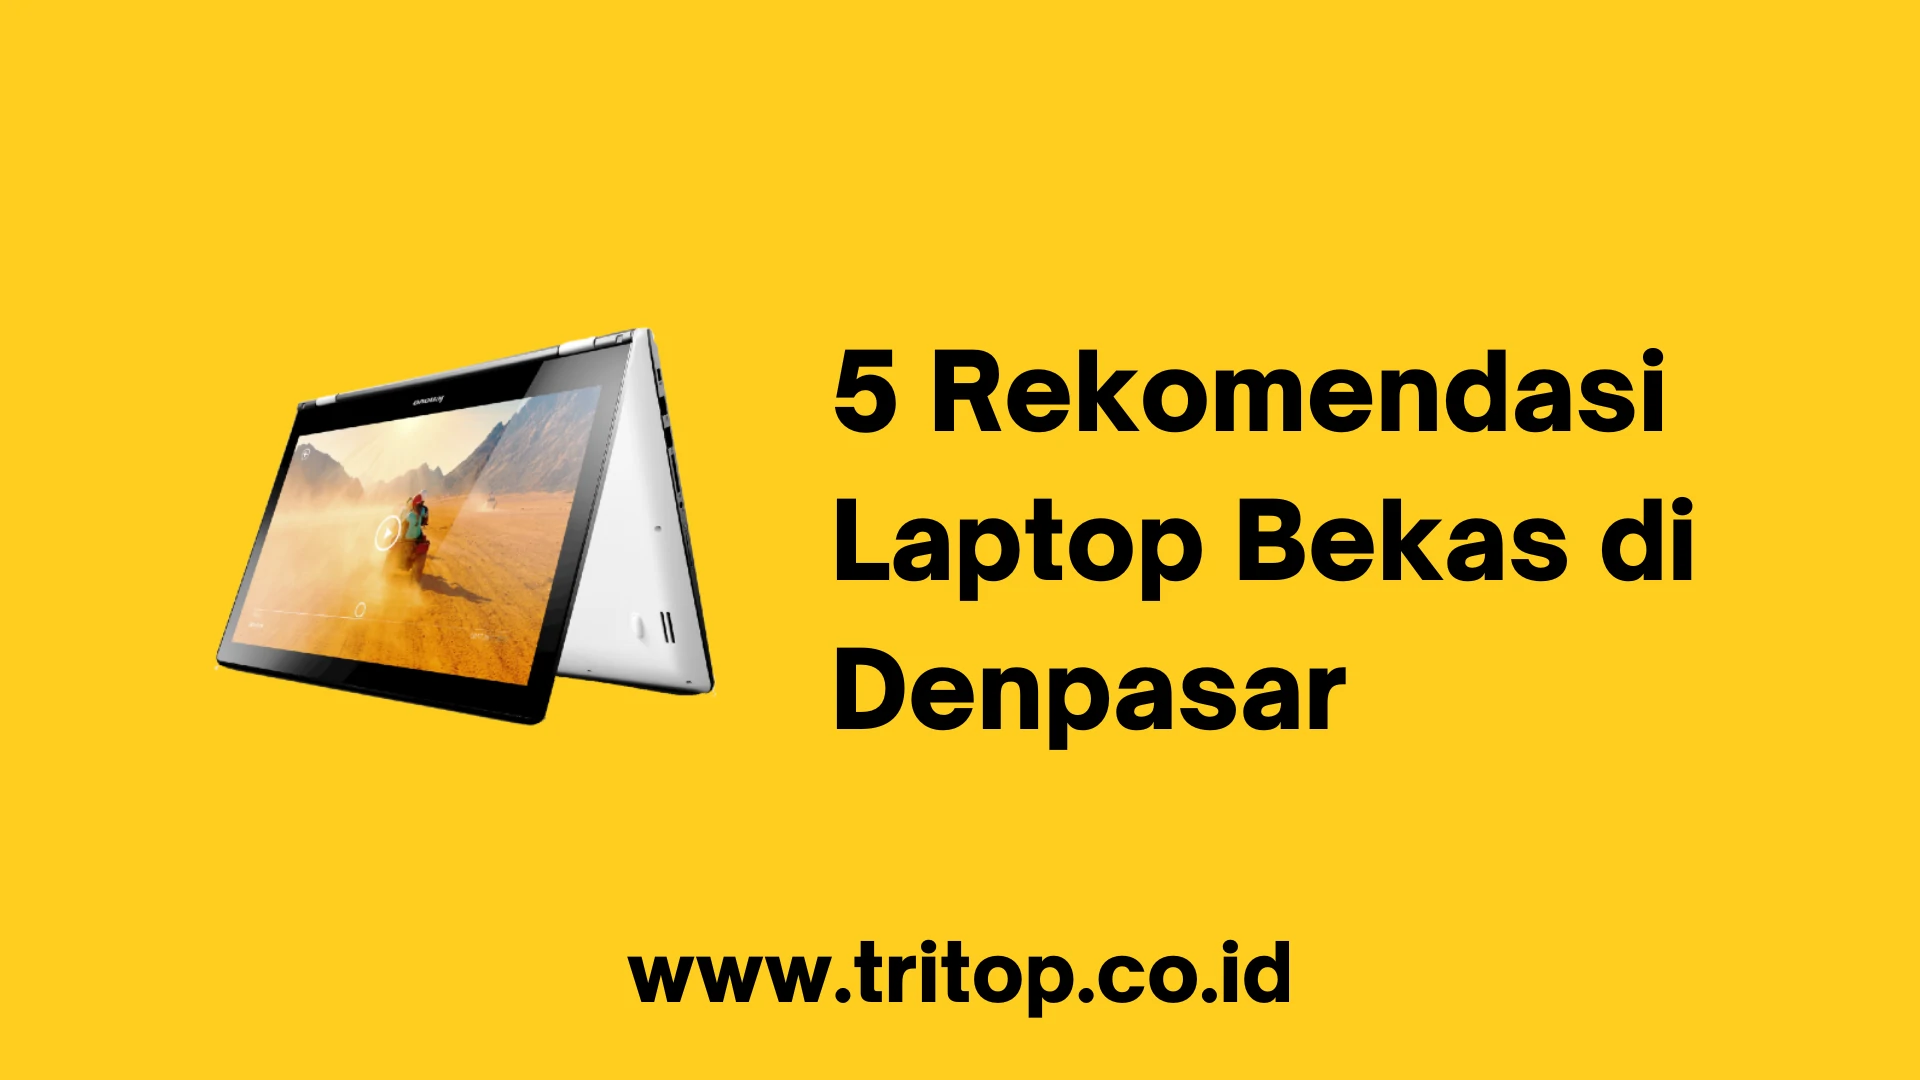 Laptop Bekas di Denpasar